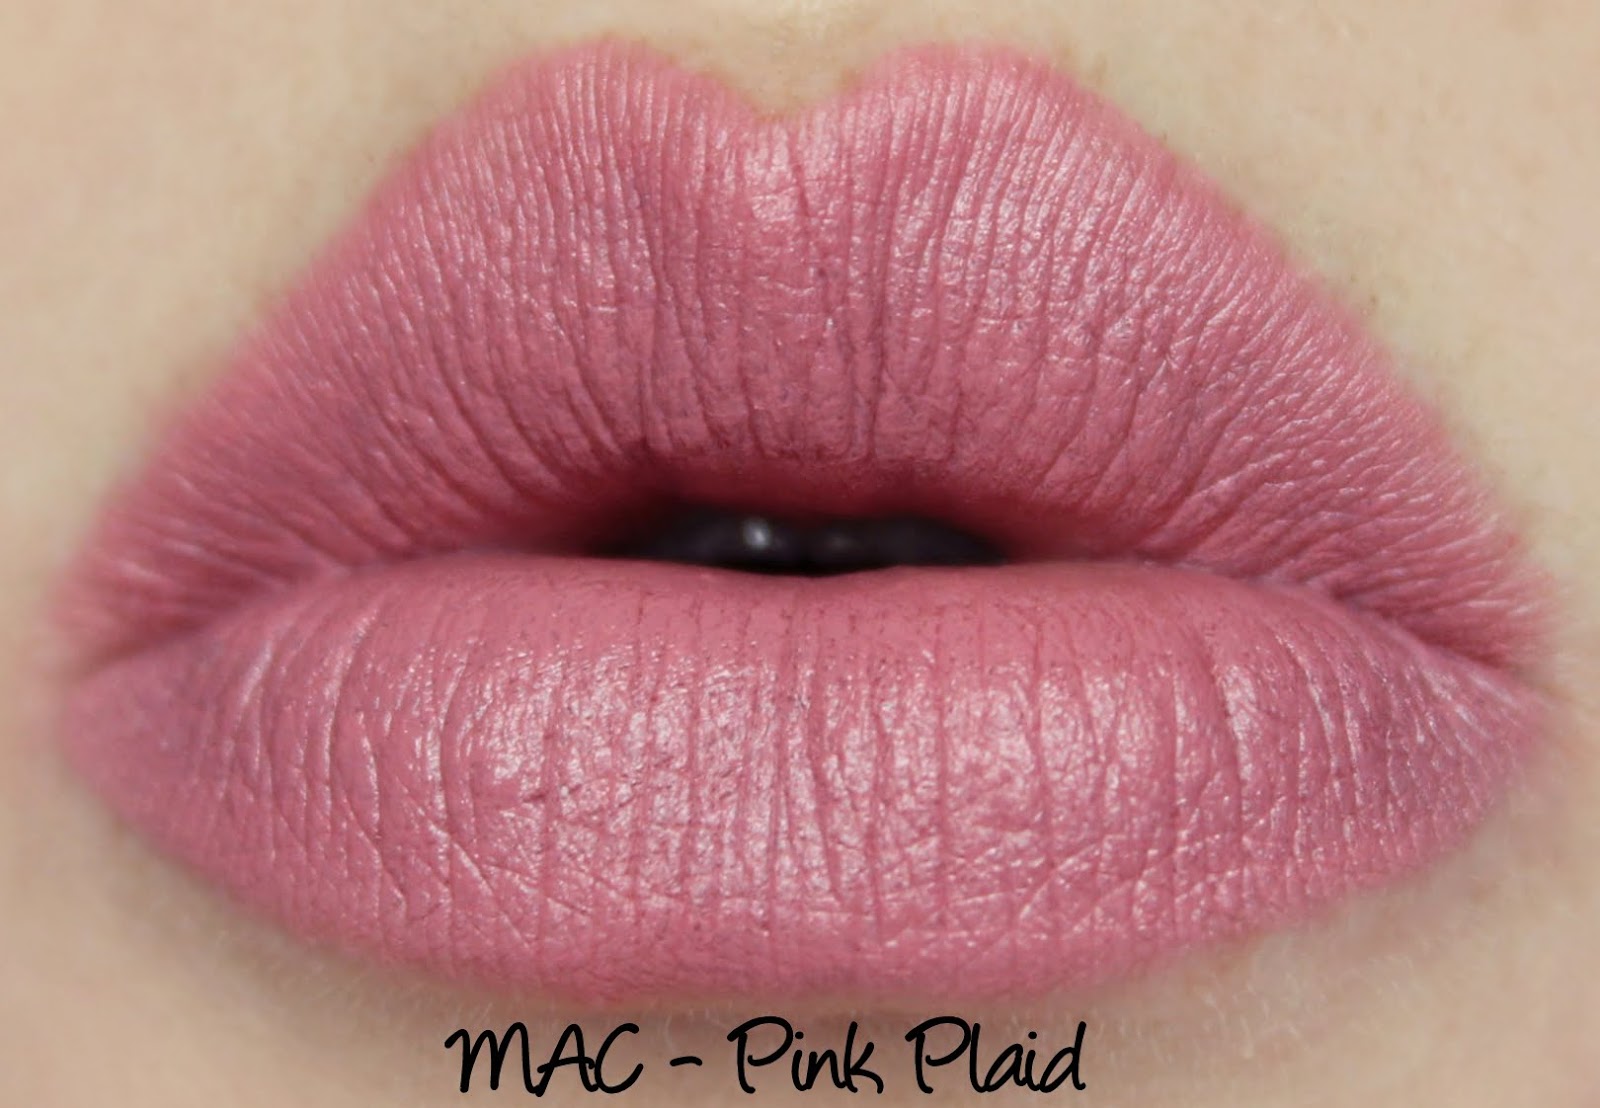 MAC Pink Plaid lipstick swatch